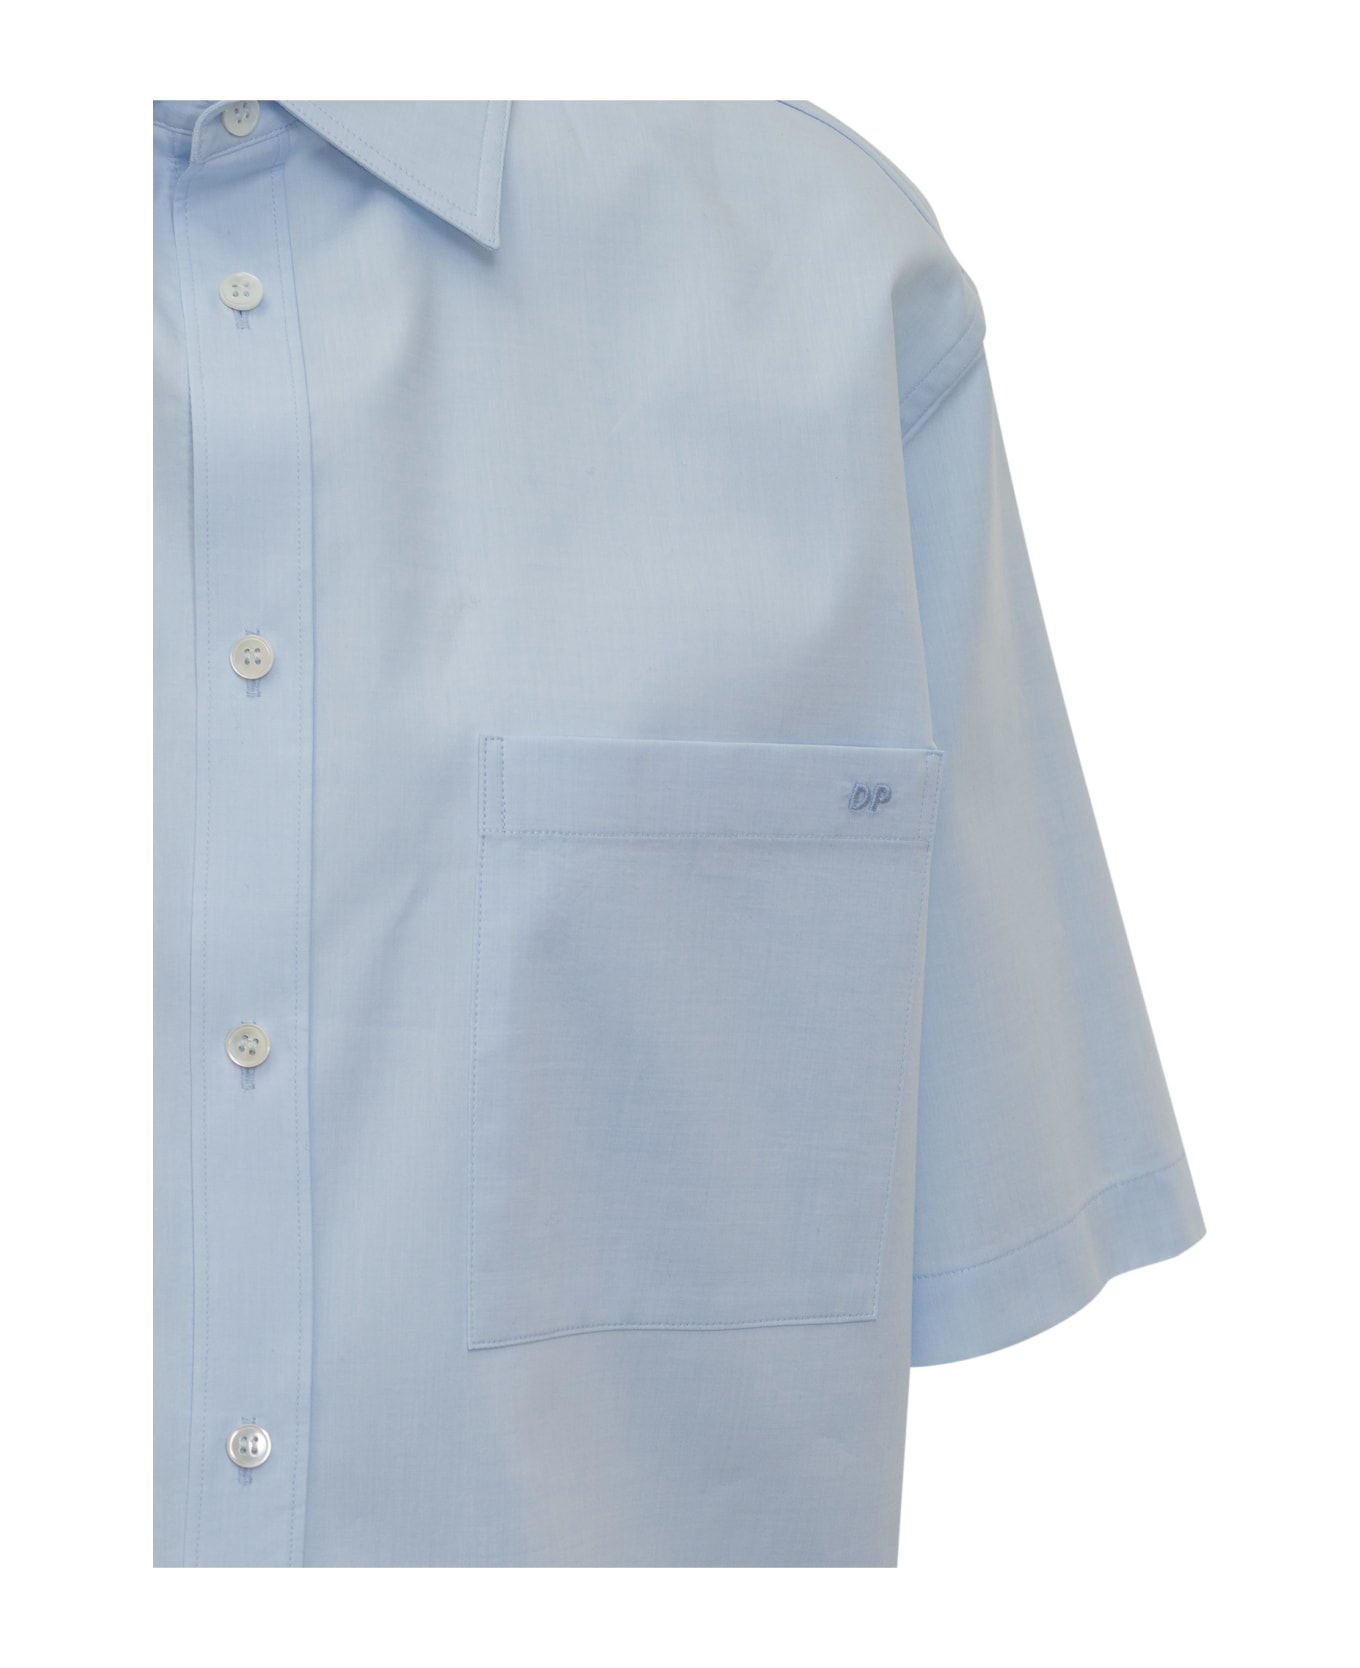 DARKPARK Shirt With Logo - Clear Blue